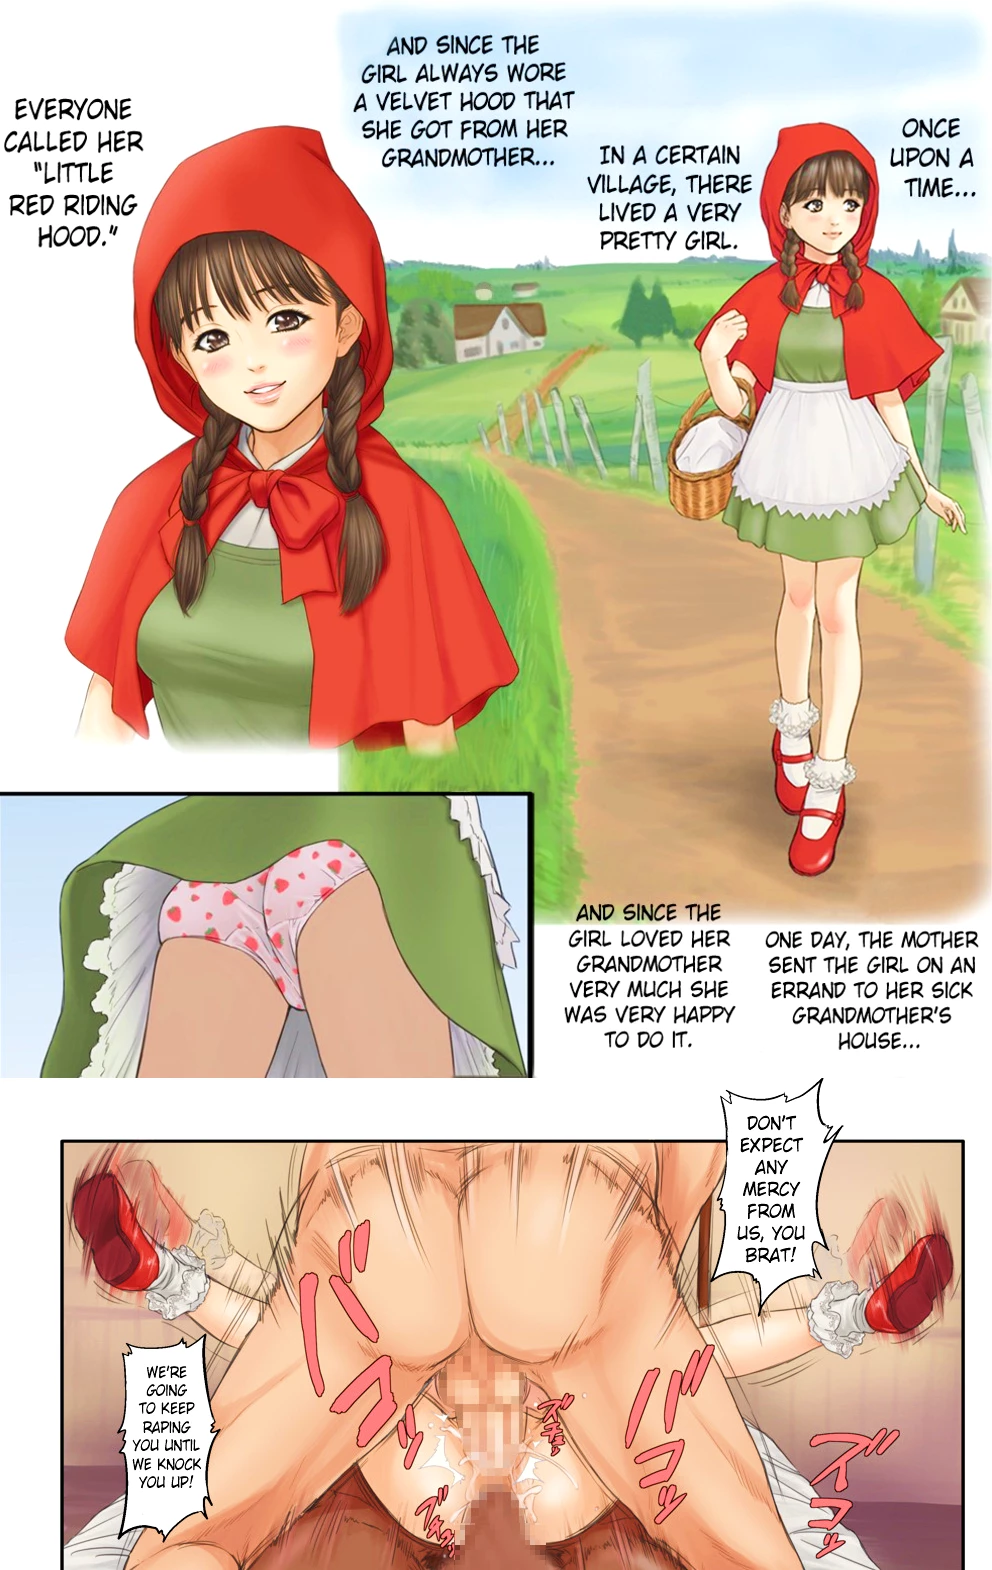 Recent Little Red Riding Hood Posts Hentai Porn.